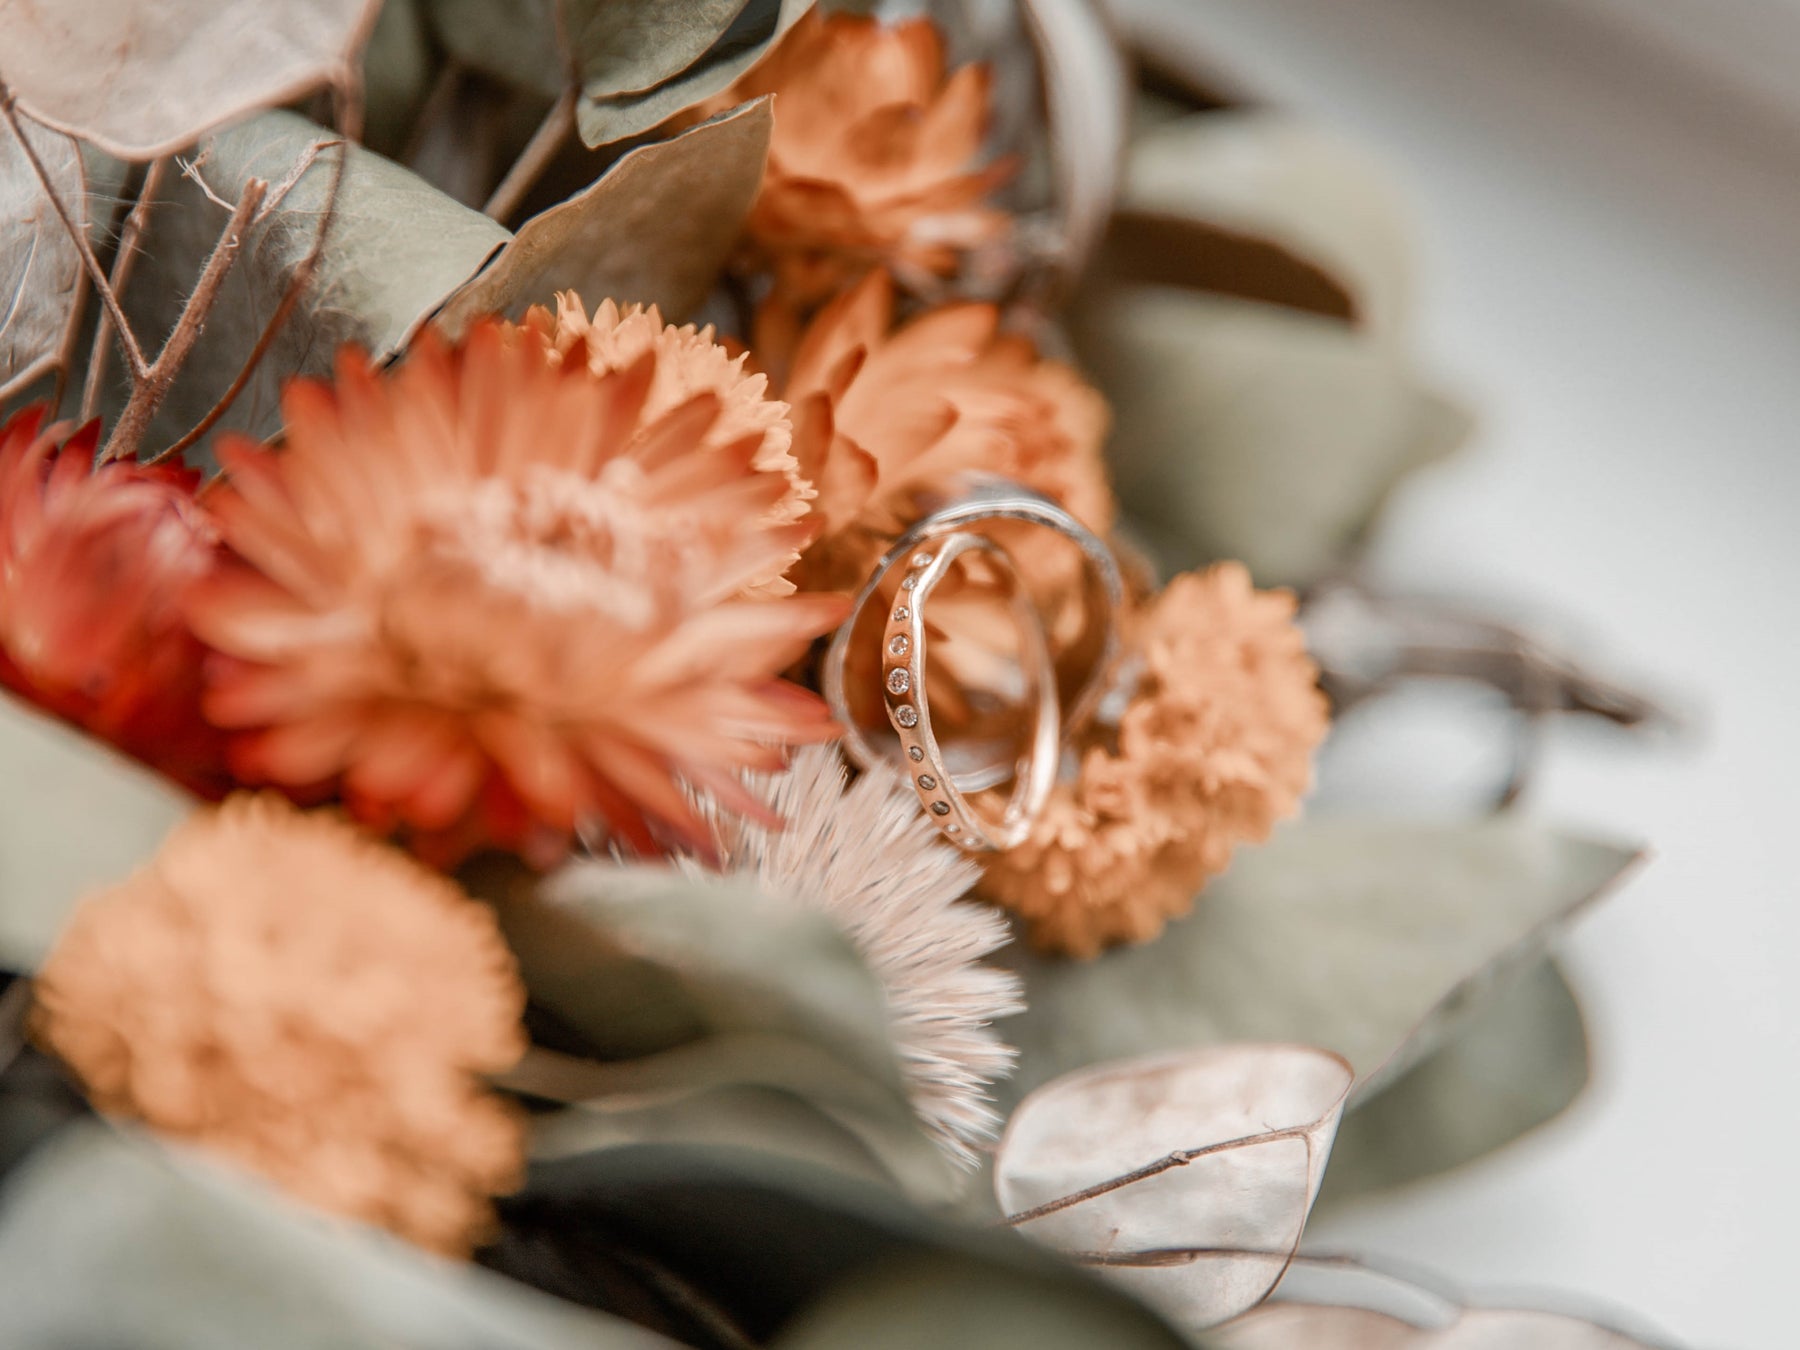 Two handmande bespoke white gold wedding rings set with diamonds, resting on an orange flower